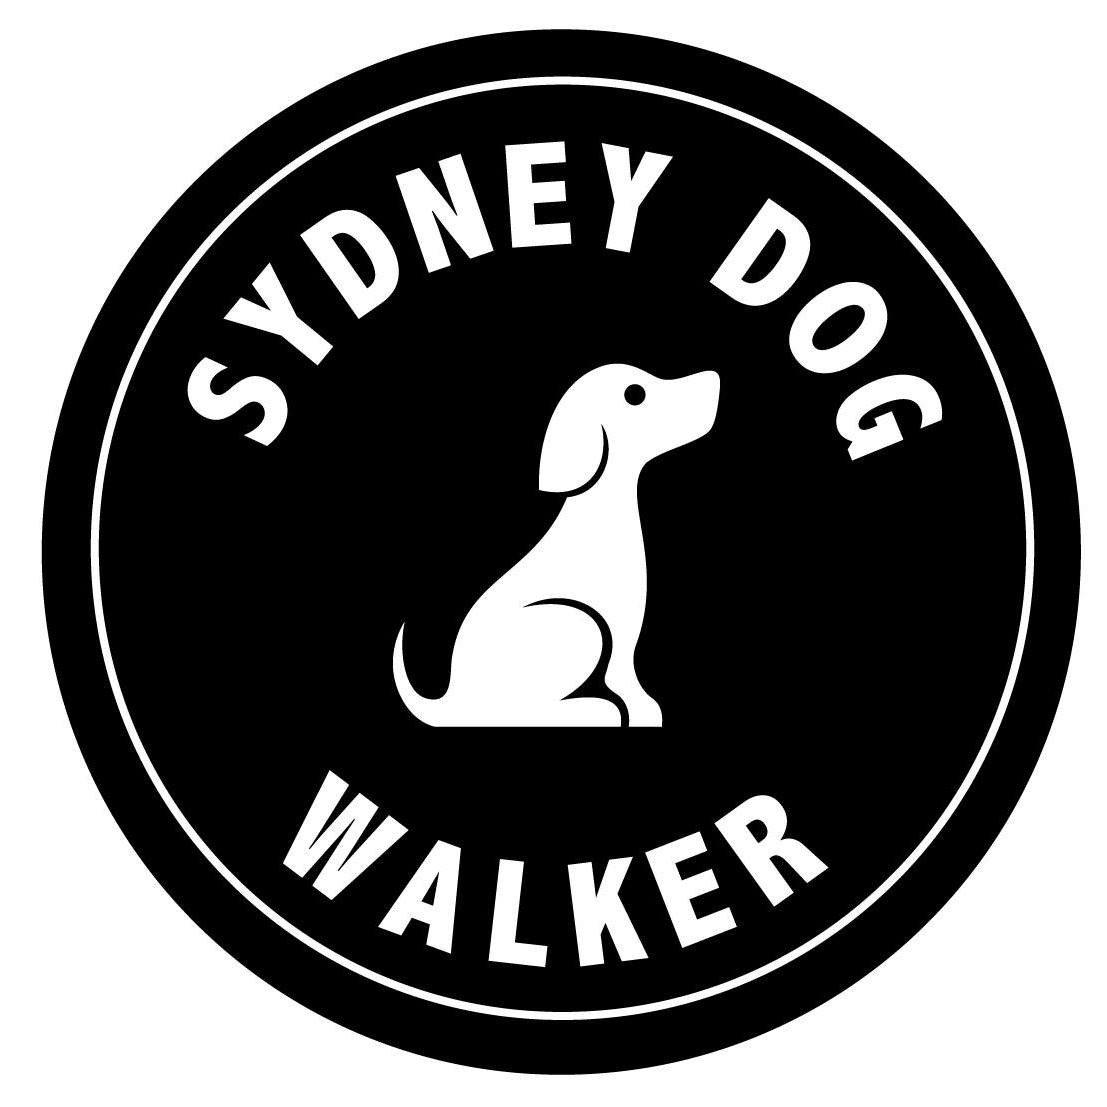 Sydney Dog Walker Logo.jpeg